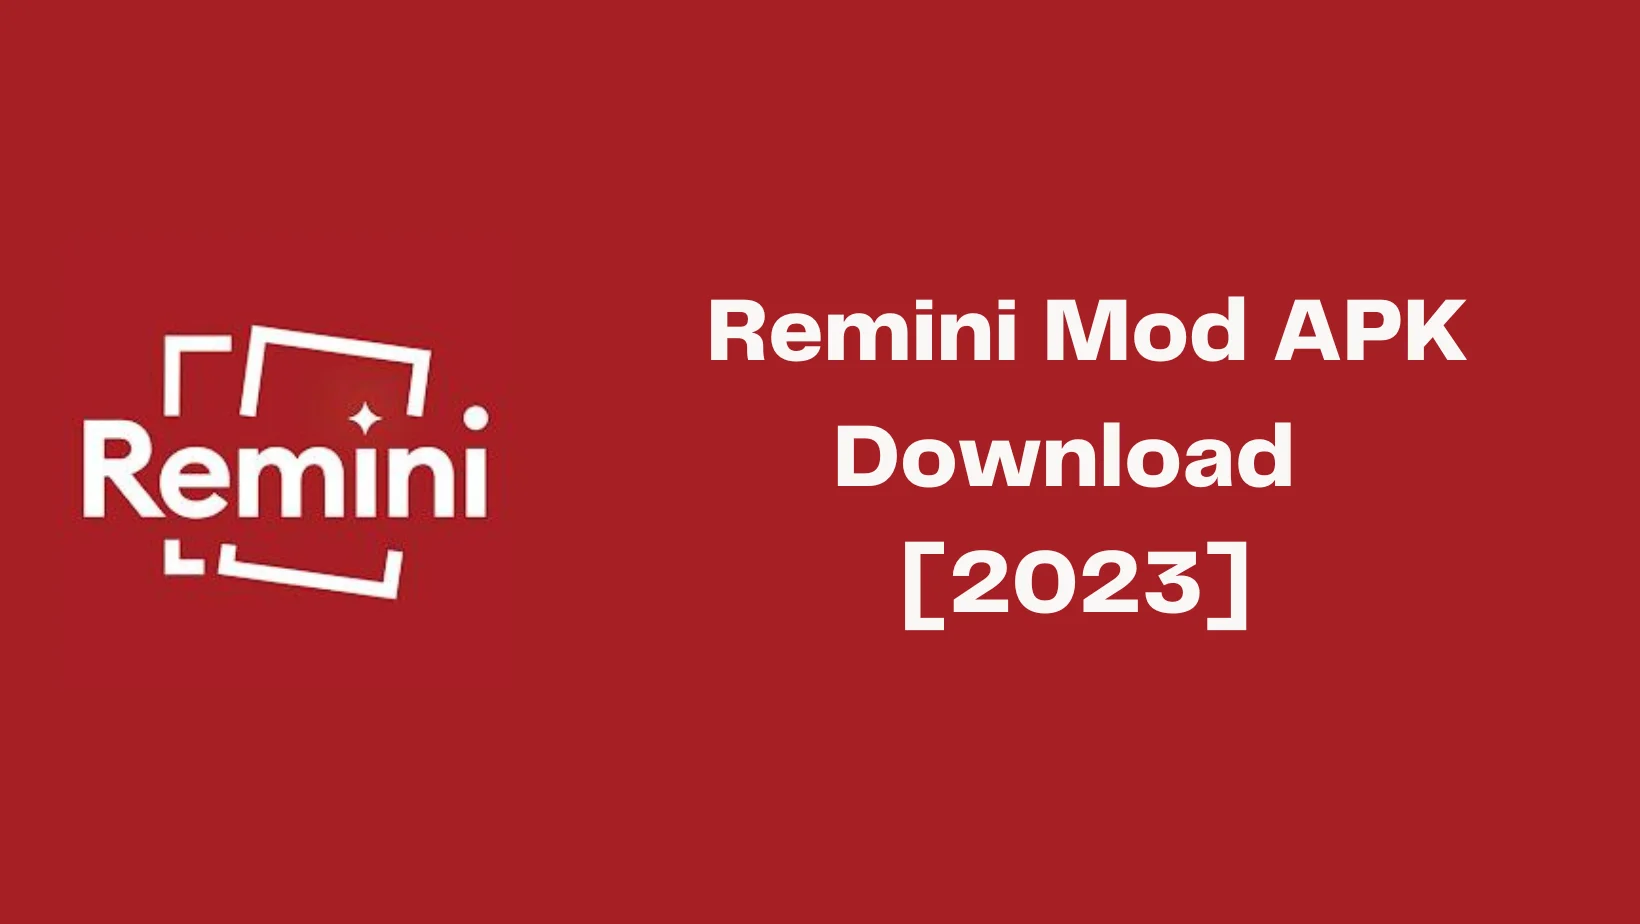 Remini Mod APK Download - No1 Techspot For Gadget Reviews, How-Tos, And Latest Mods